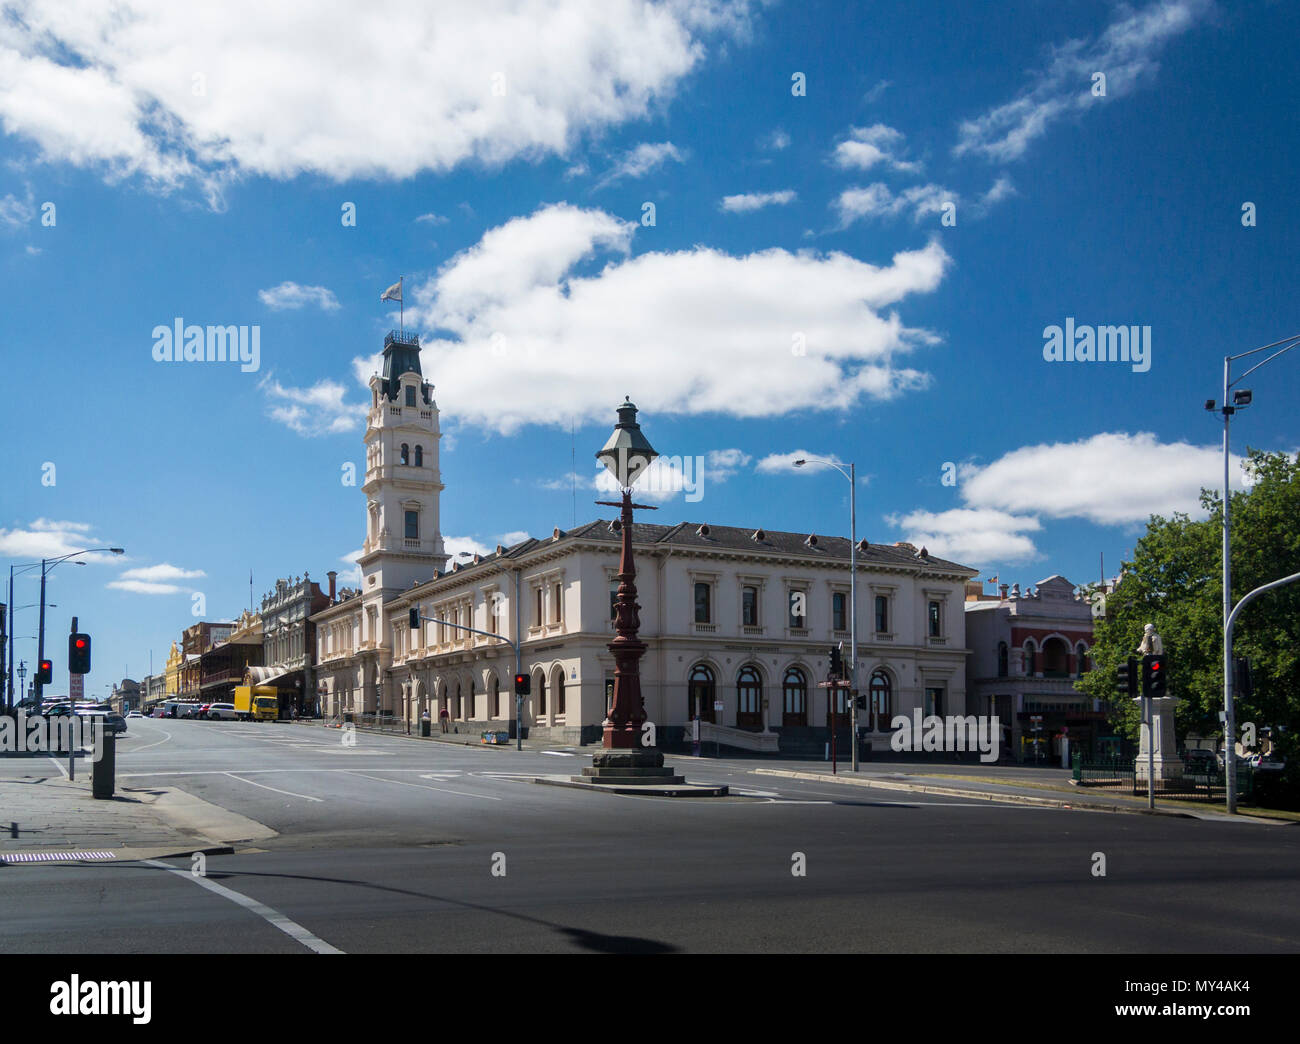 View of Lydiard Street in the city of Ballarat, Victoria, Australia Stock Photo